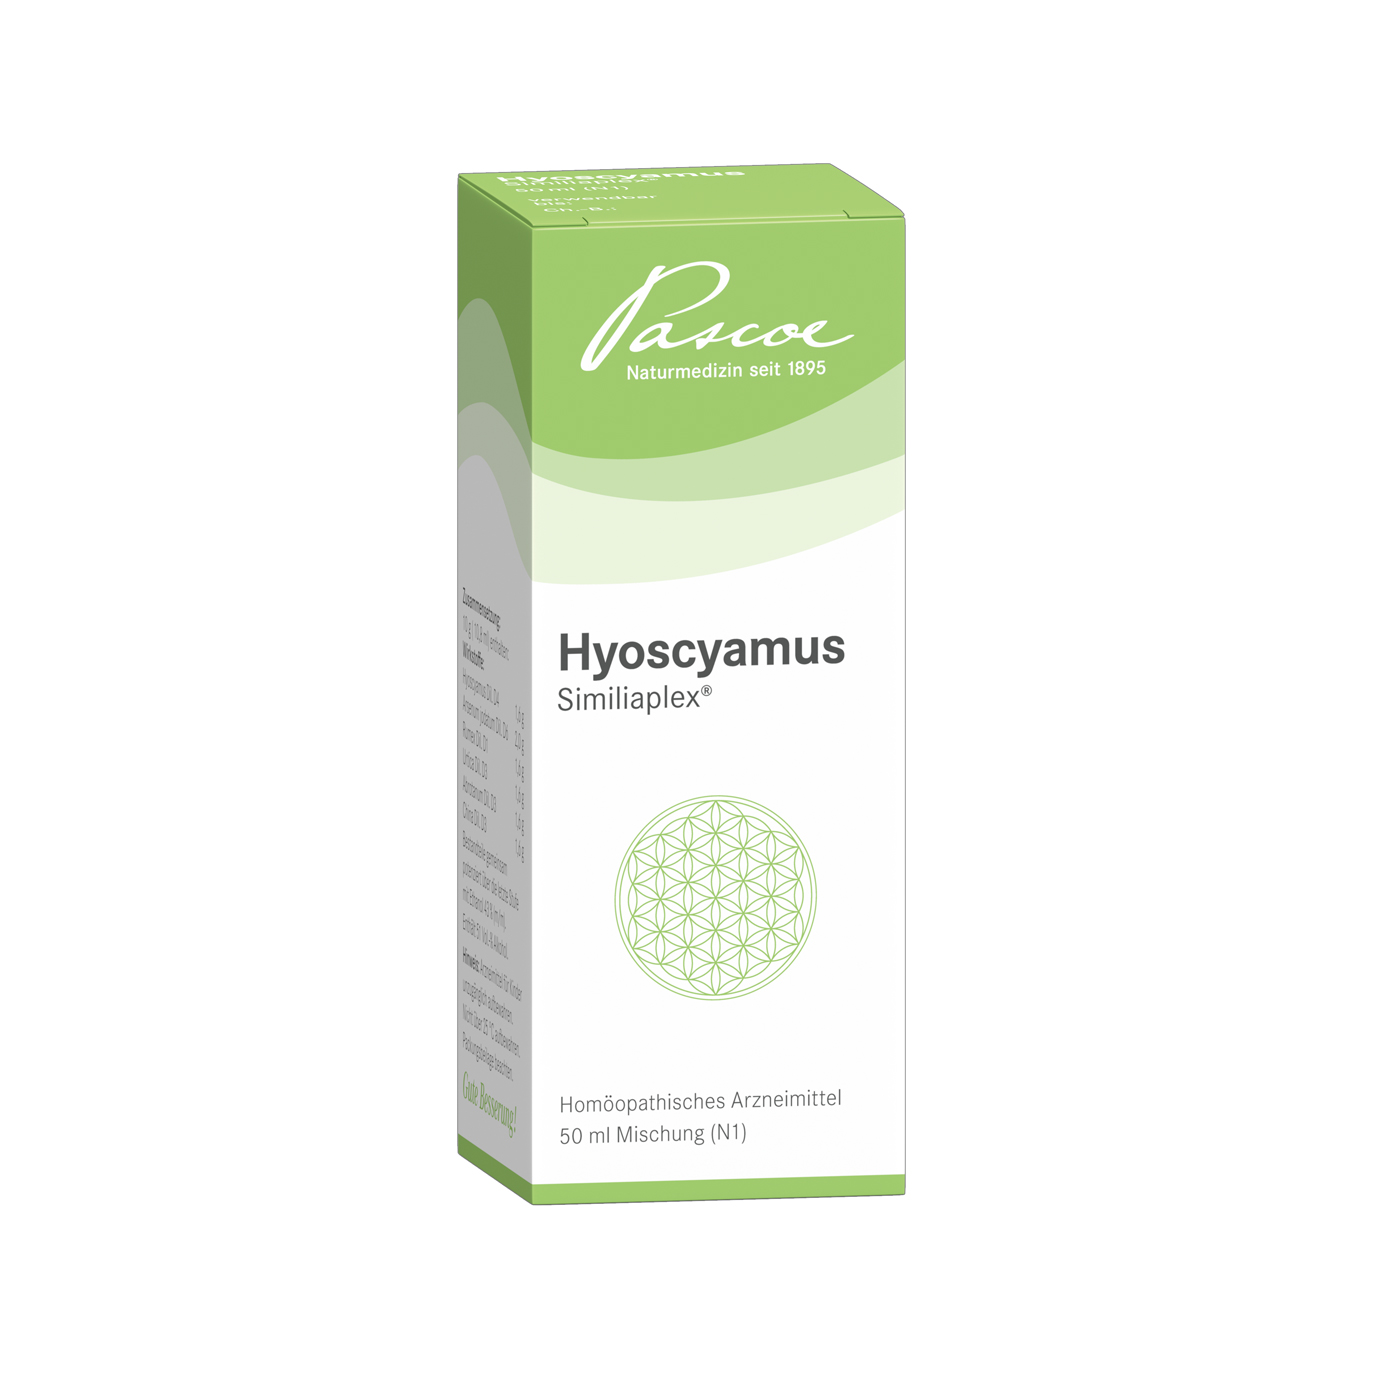 Hyoscyamus Similiaplex 50 ml Packshot PZN 00278729